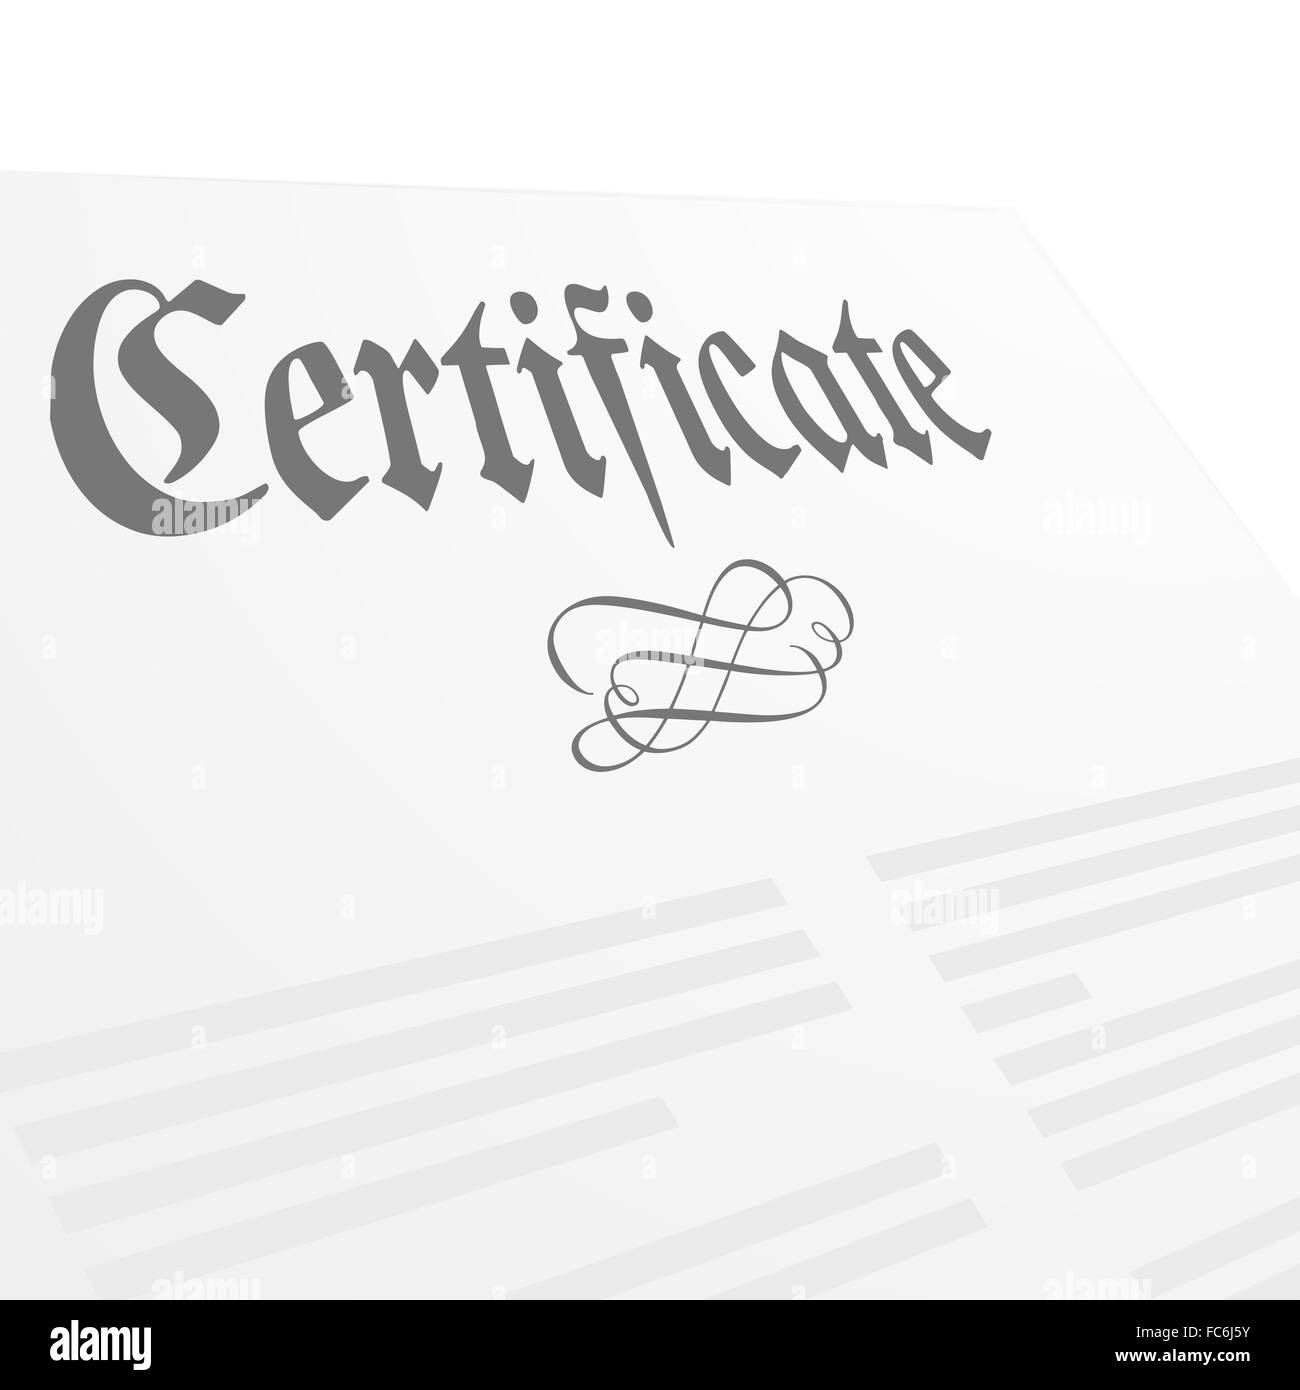 Certificate Stock Photo